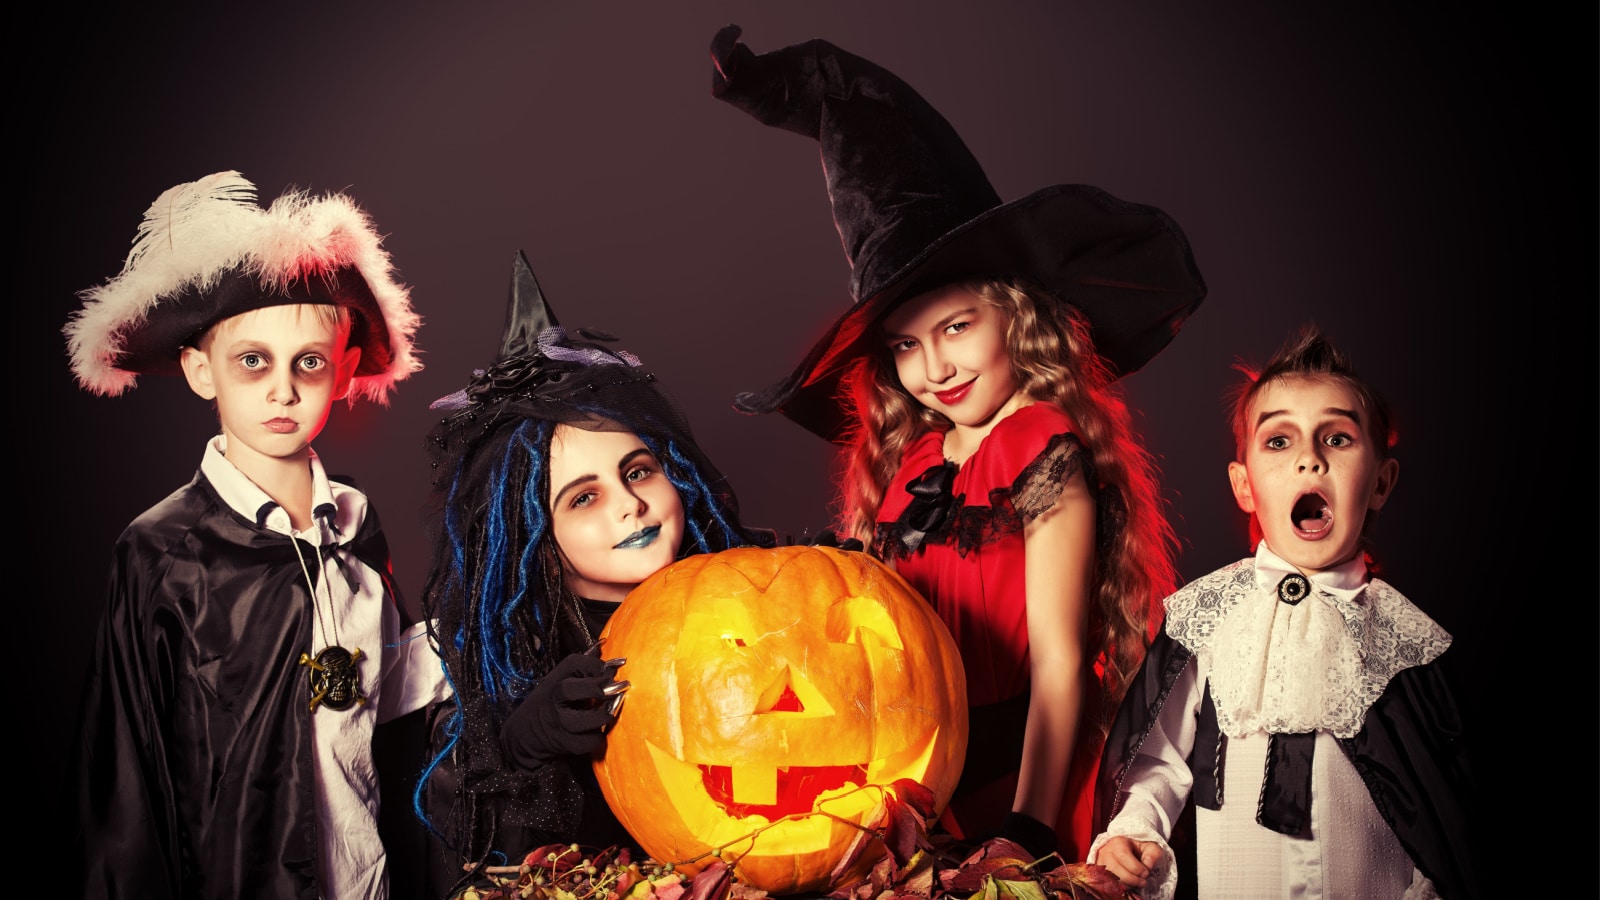 Cheerful children in halloween costumes posing with pumpkin over dark background.